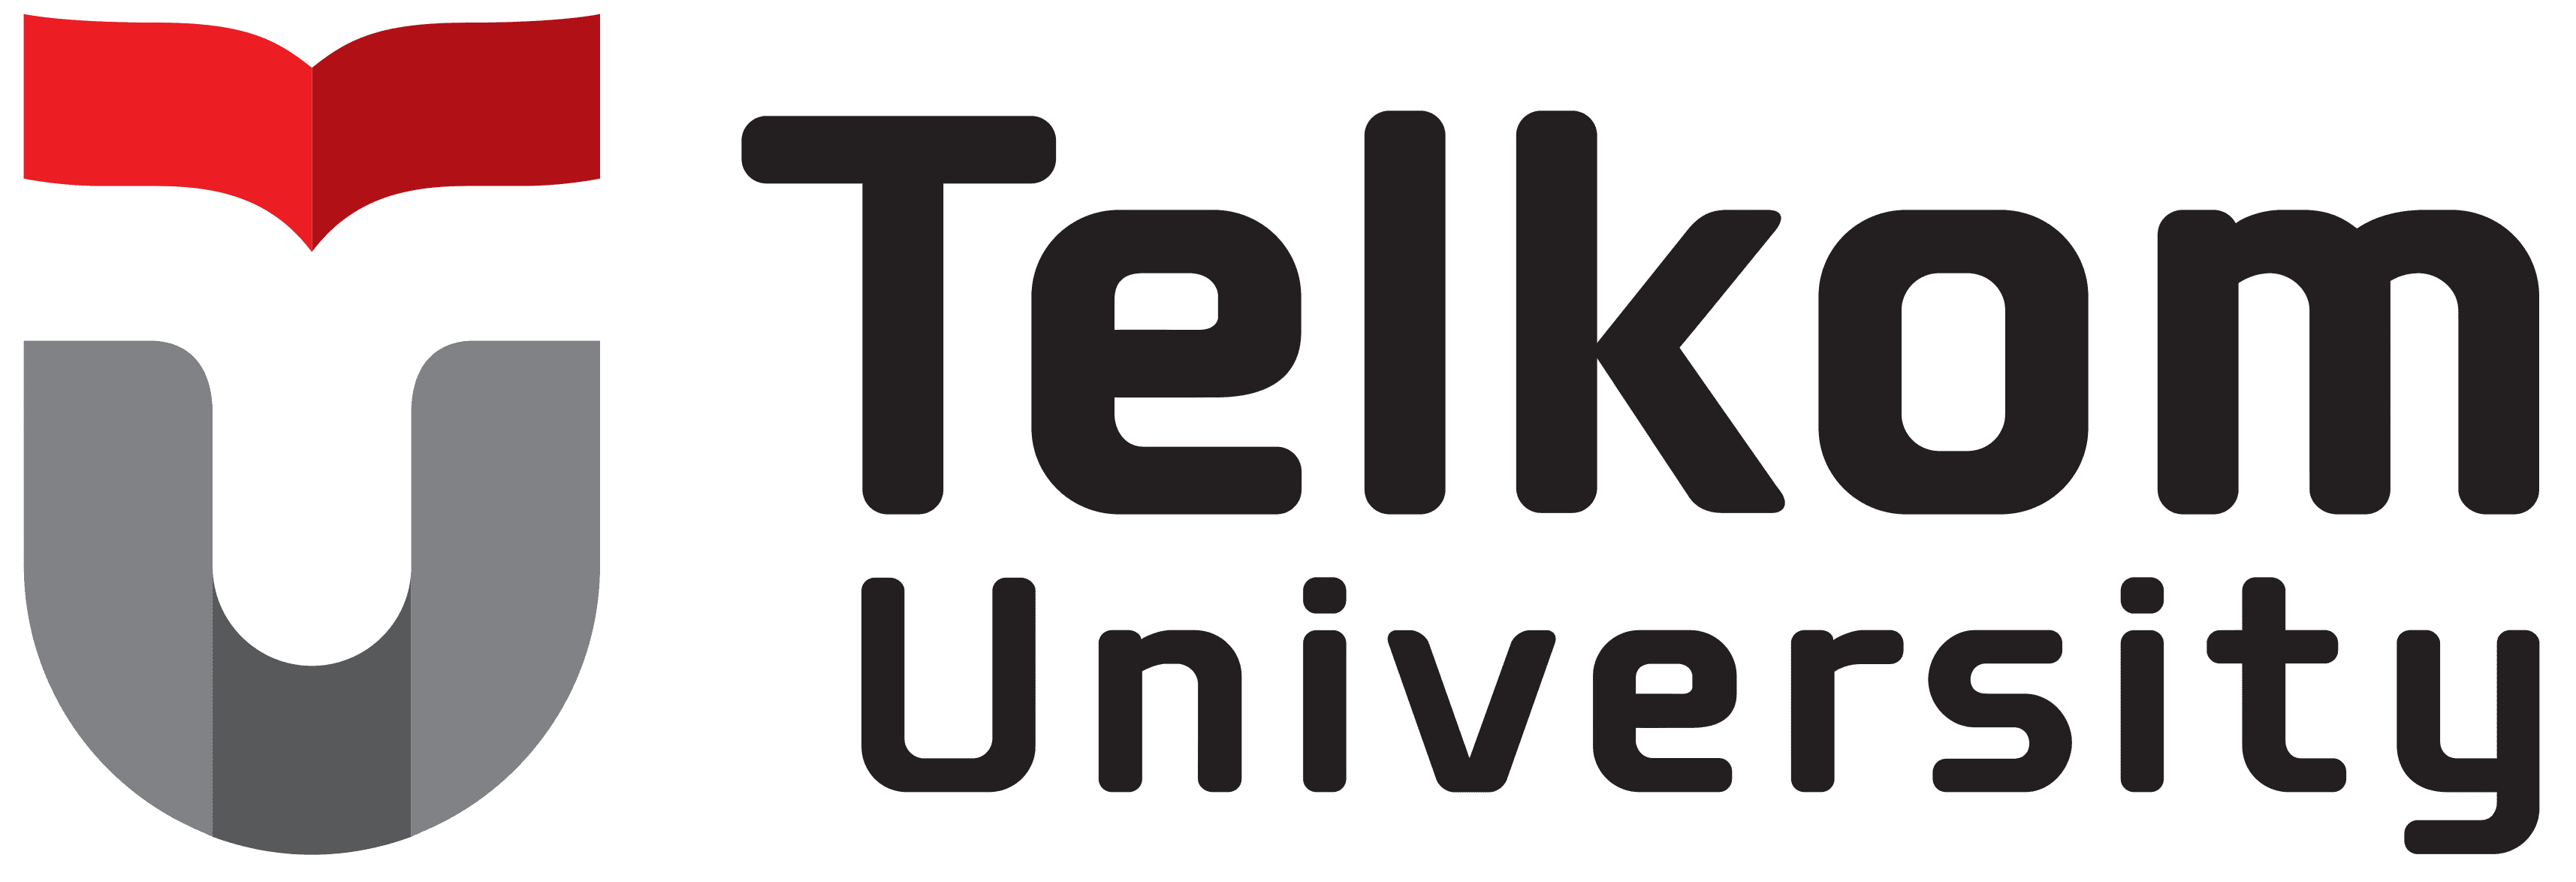 Telkom University Universitas Swasta Terbaik se Indonesia